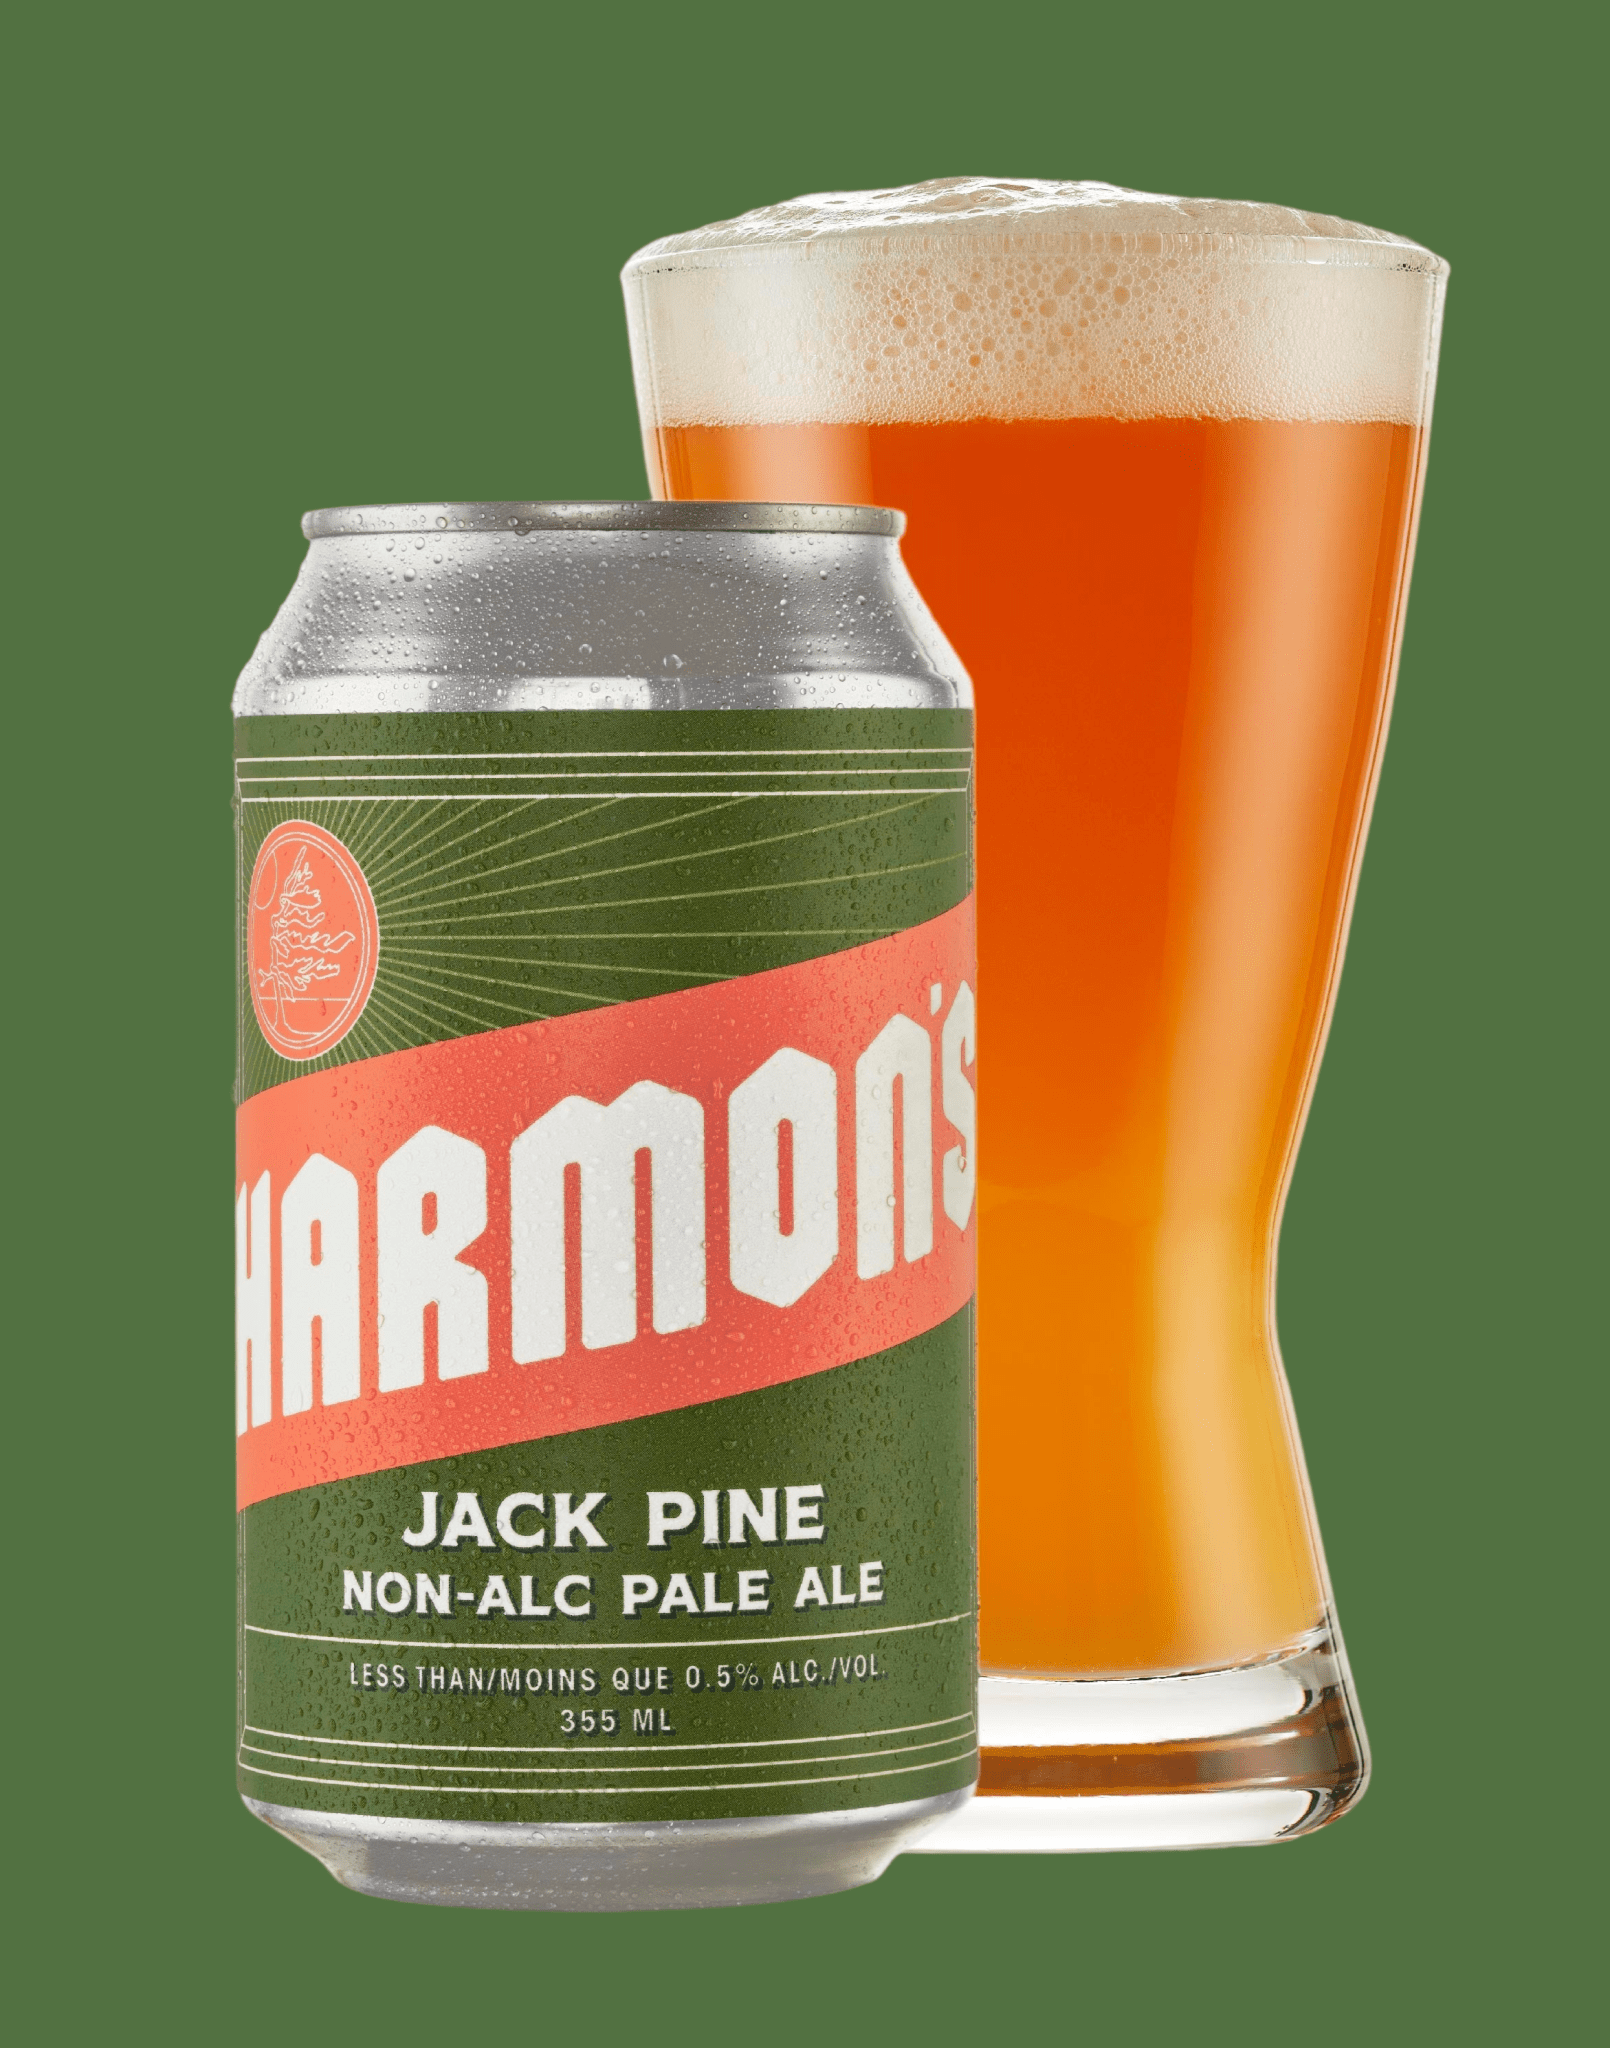 Harmon's Jack Pine Non-Alc Pale Ale